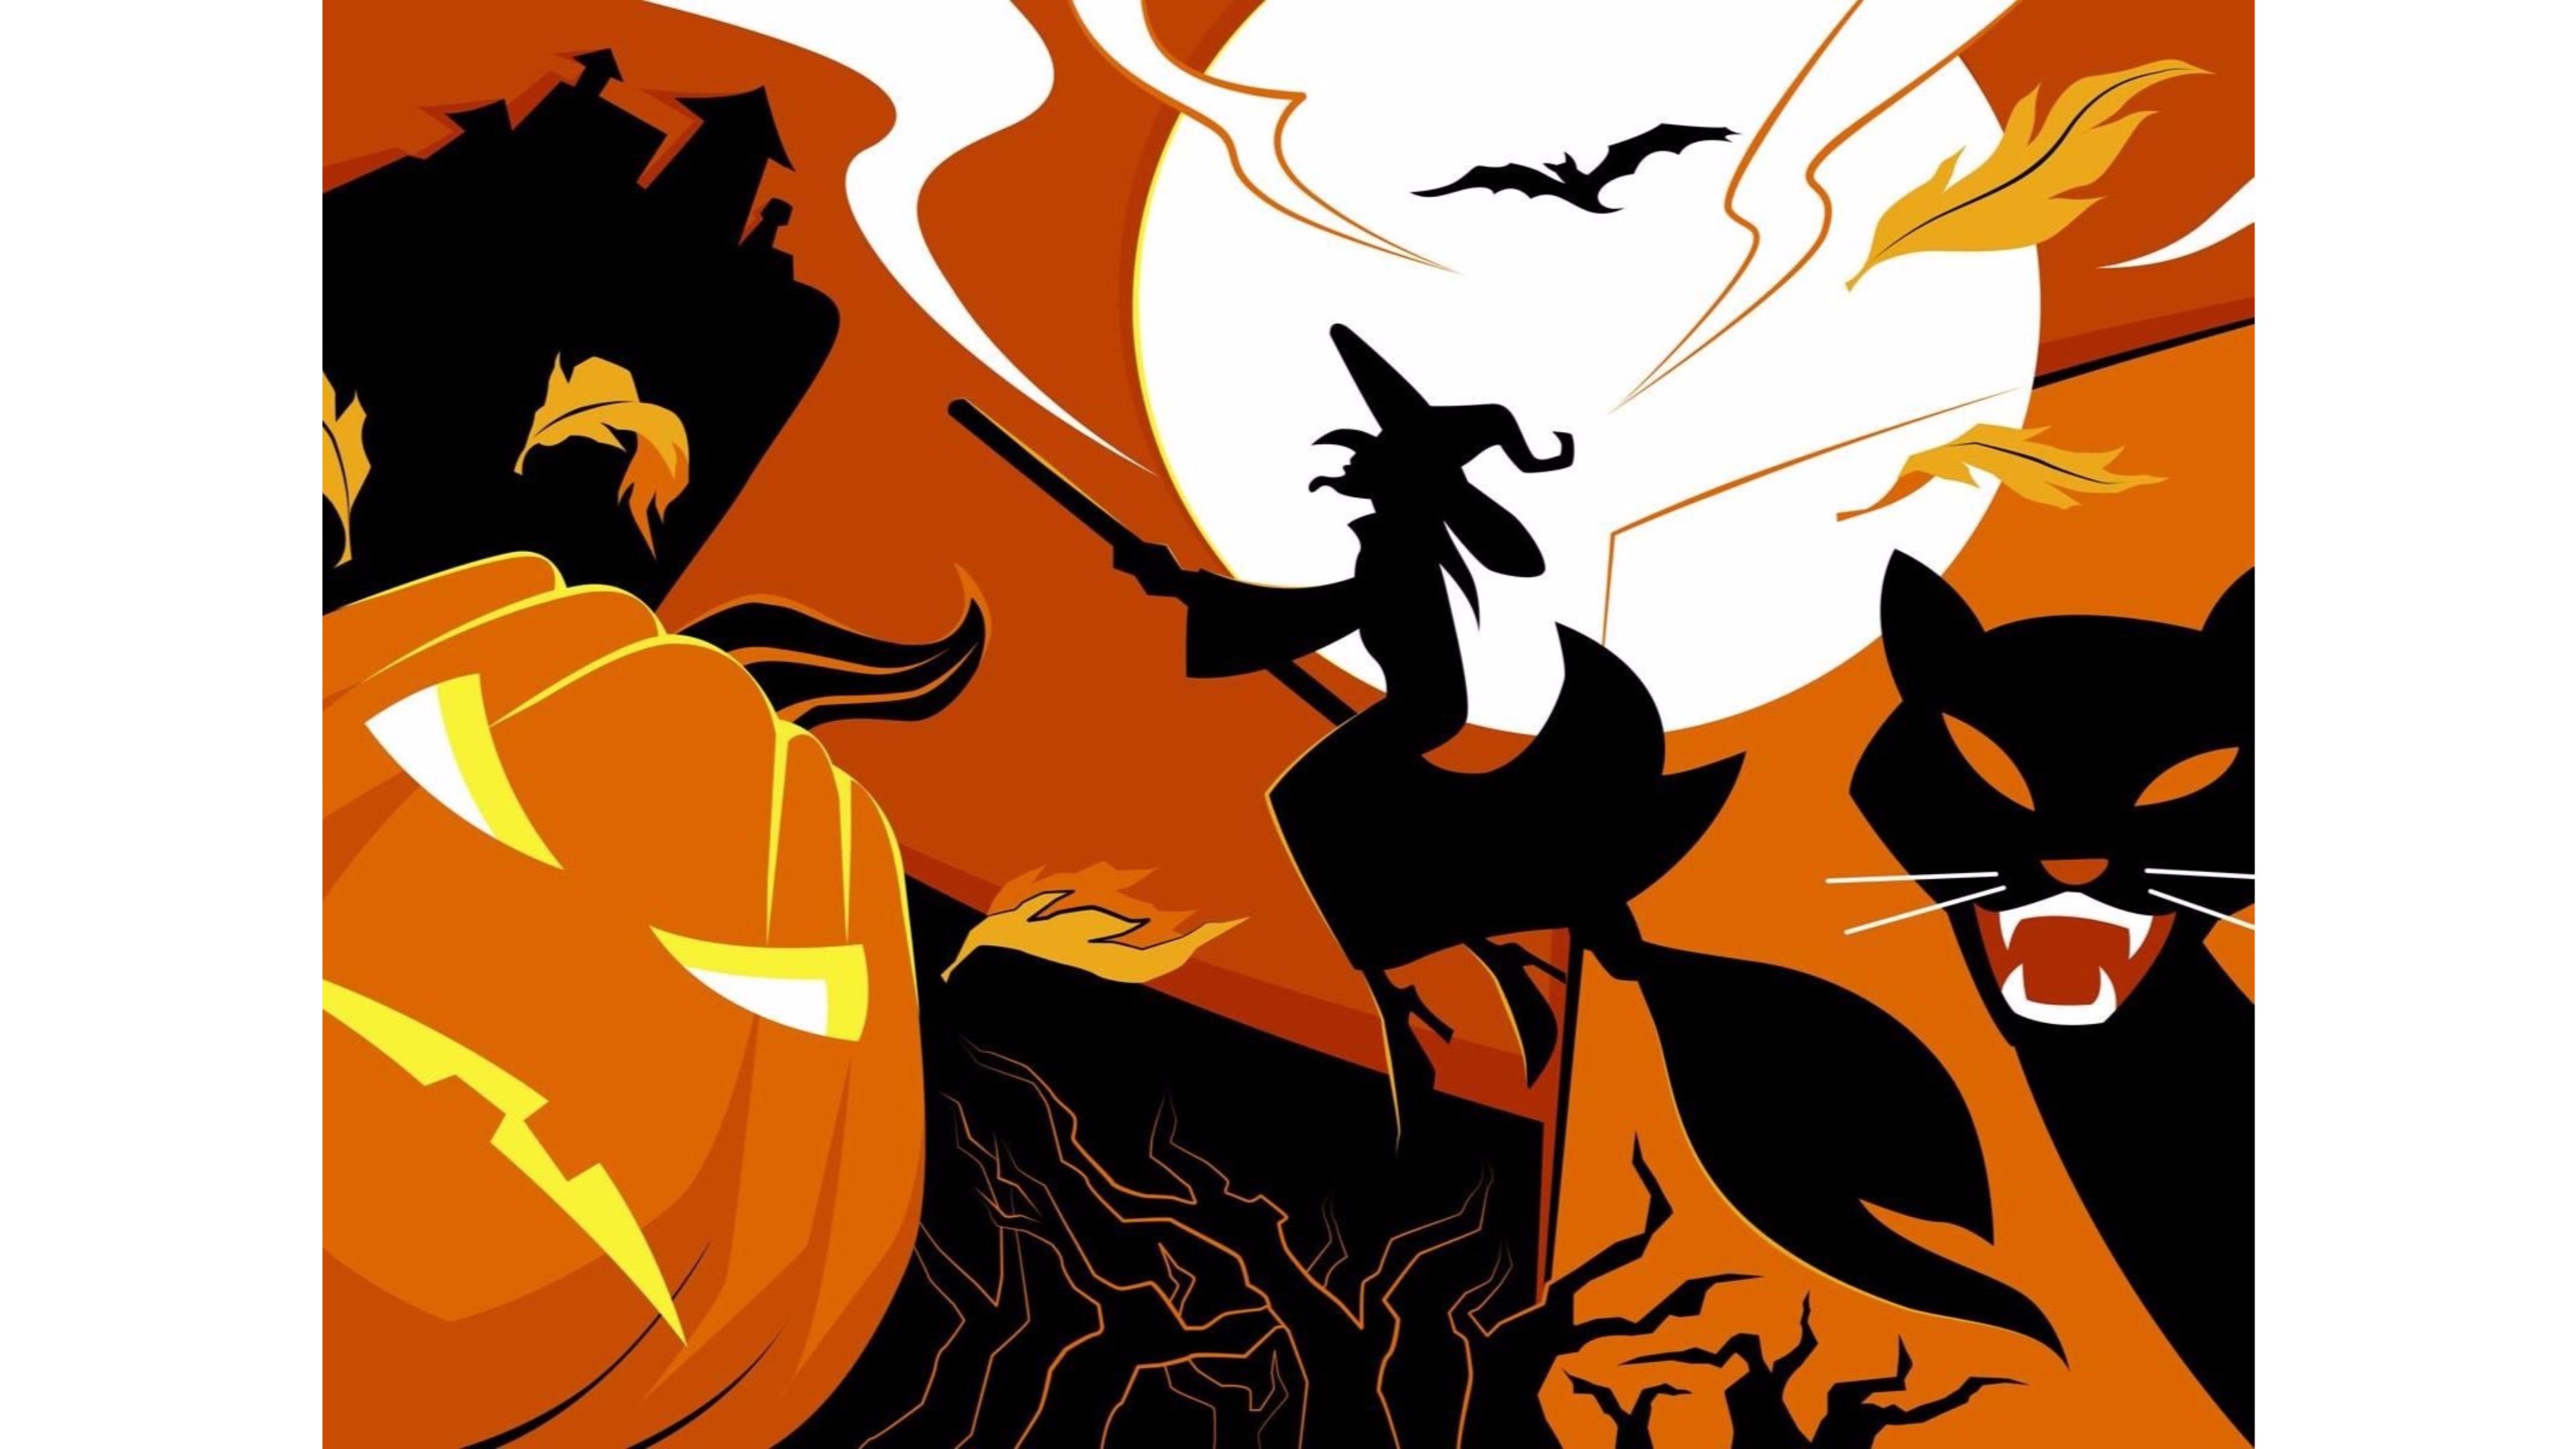 of Halloween 4K wallpaper for your desktop or mobile screen